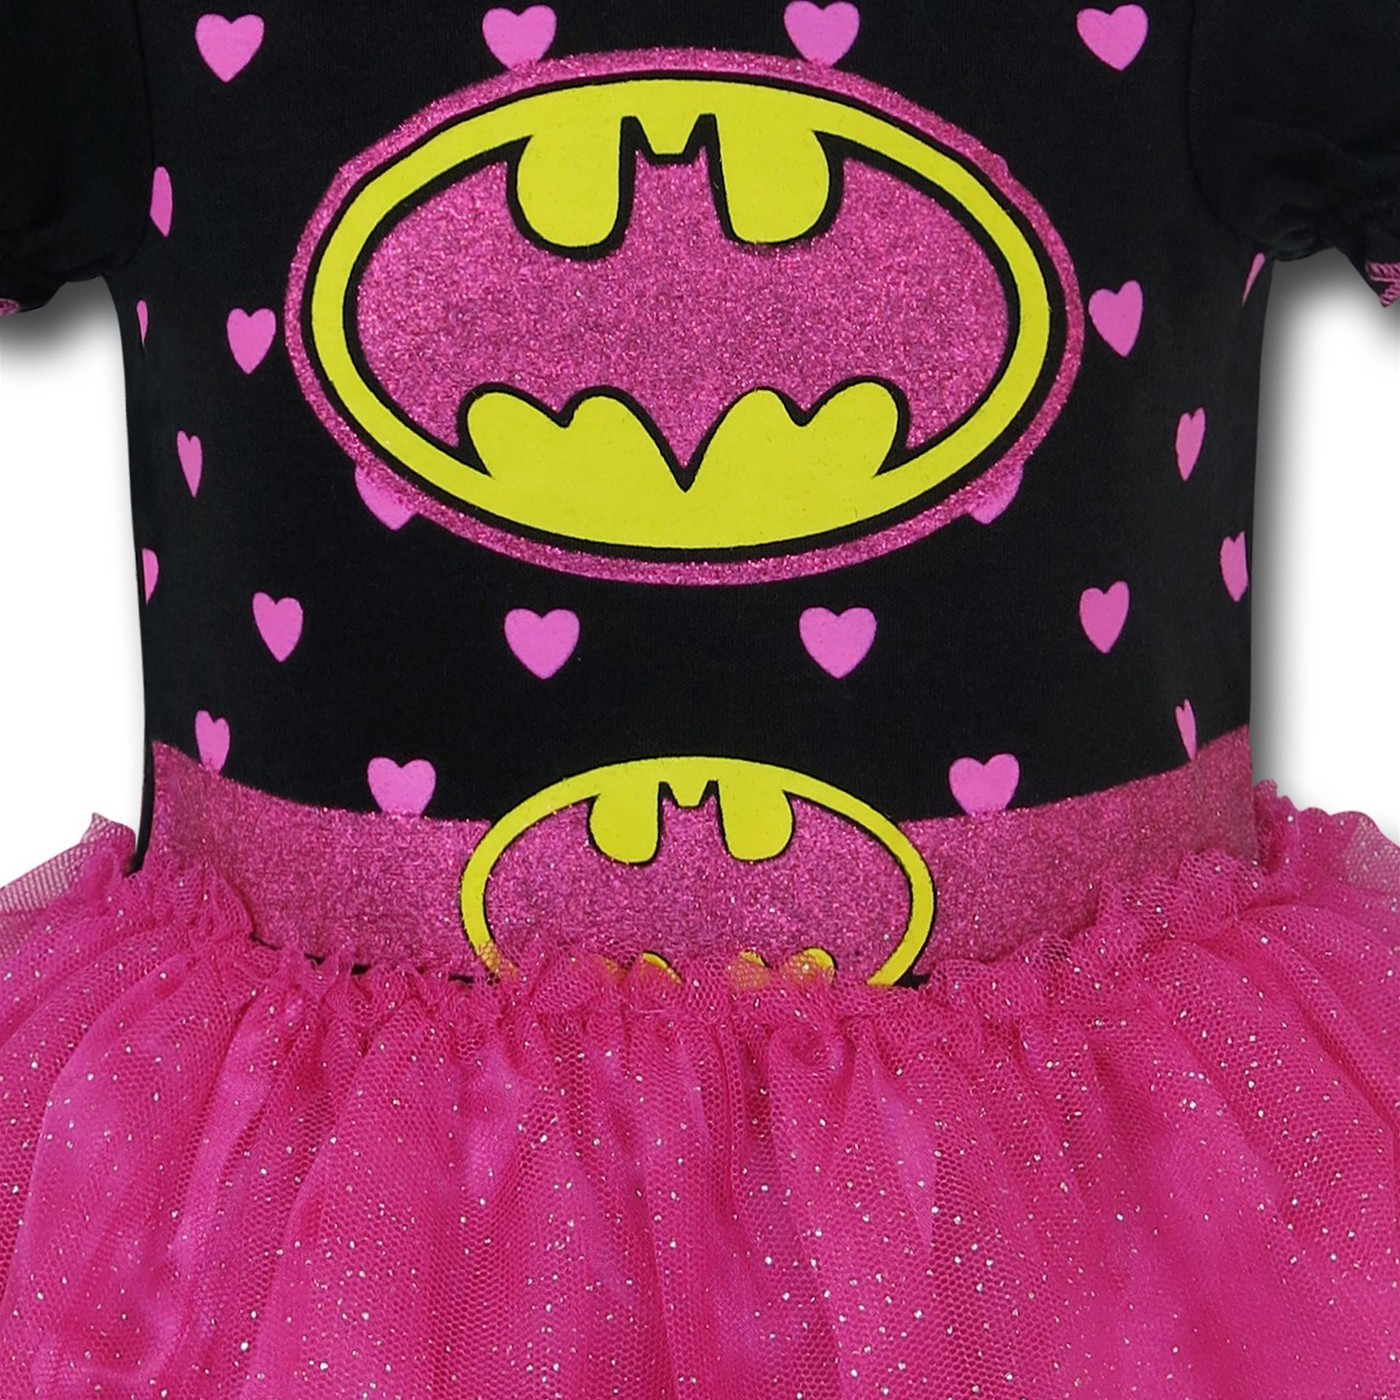 Batgirl Costume Dress Infant Snapsuit